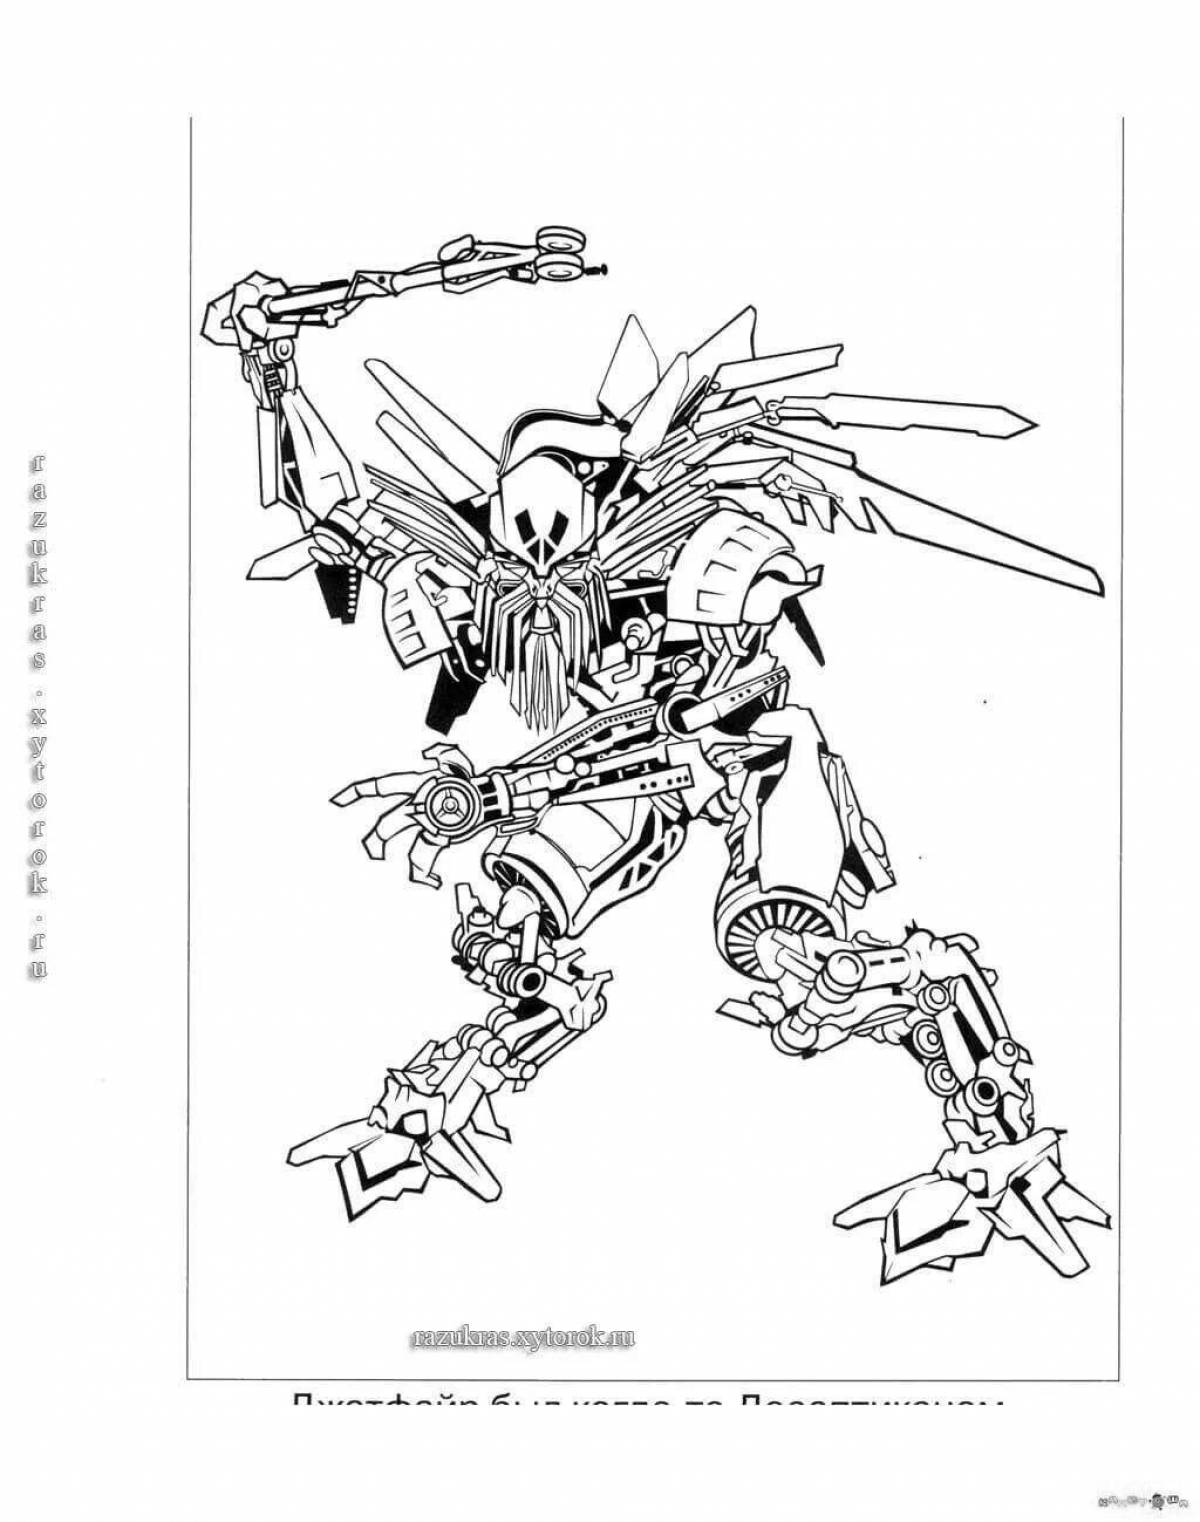 Gorgeous Decepticon transformers coloring book